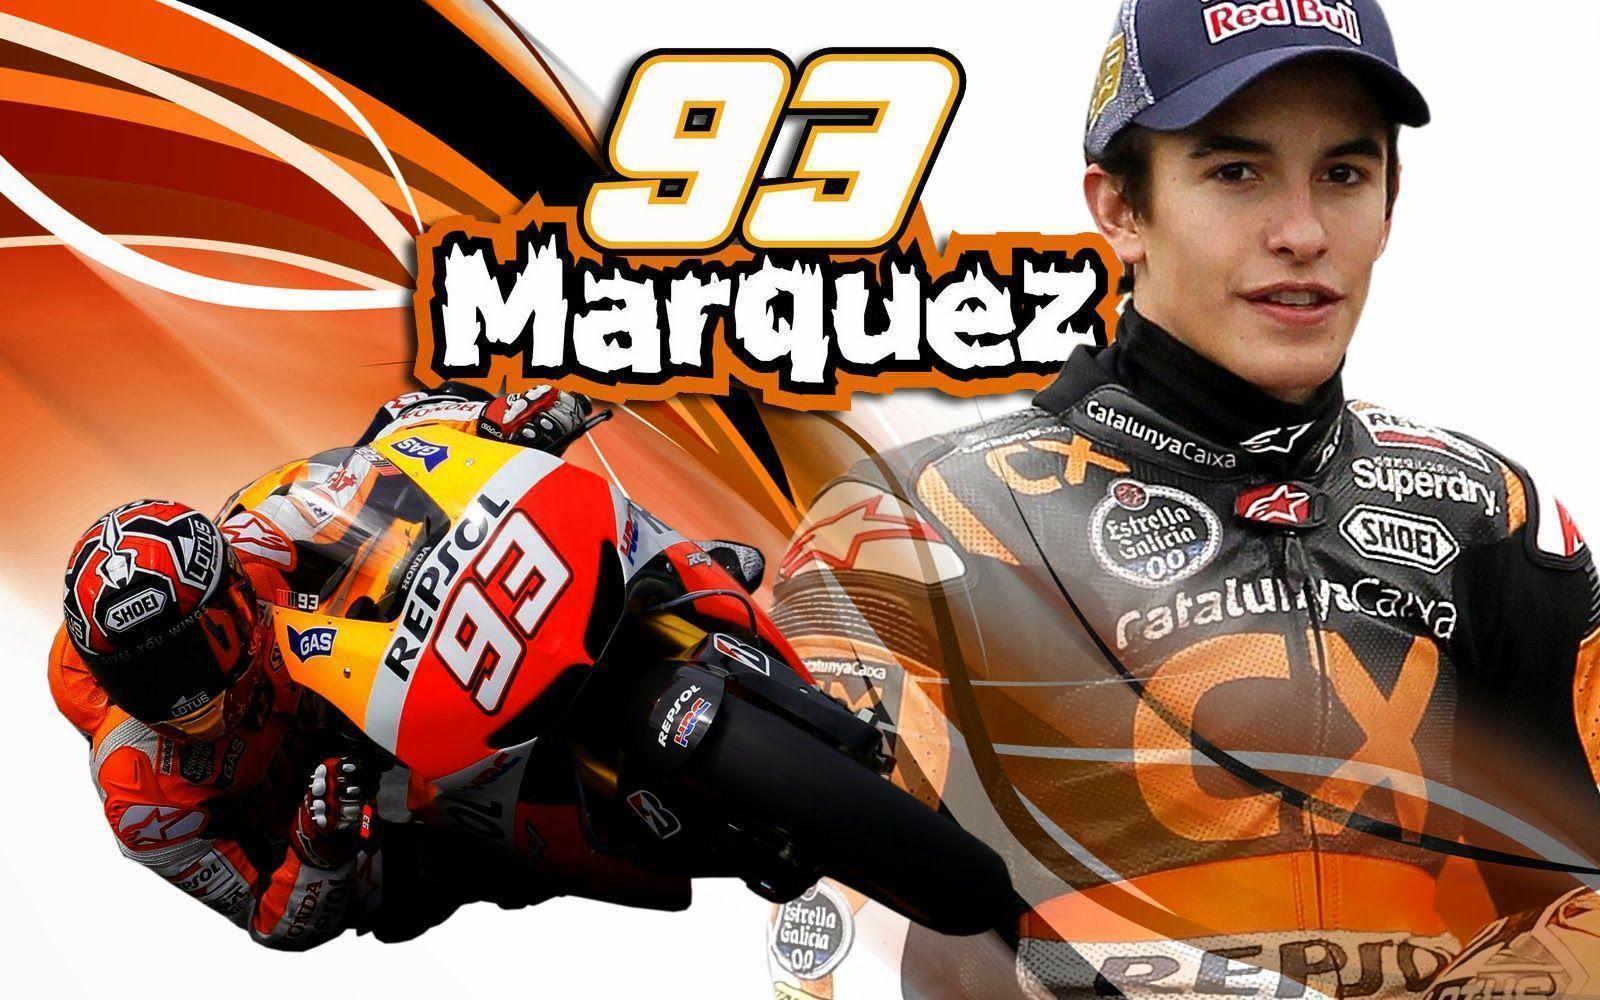 MotoGP Marc Marquez Wallpaper. MotoGP. Motogp, Marc